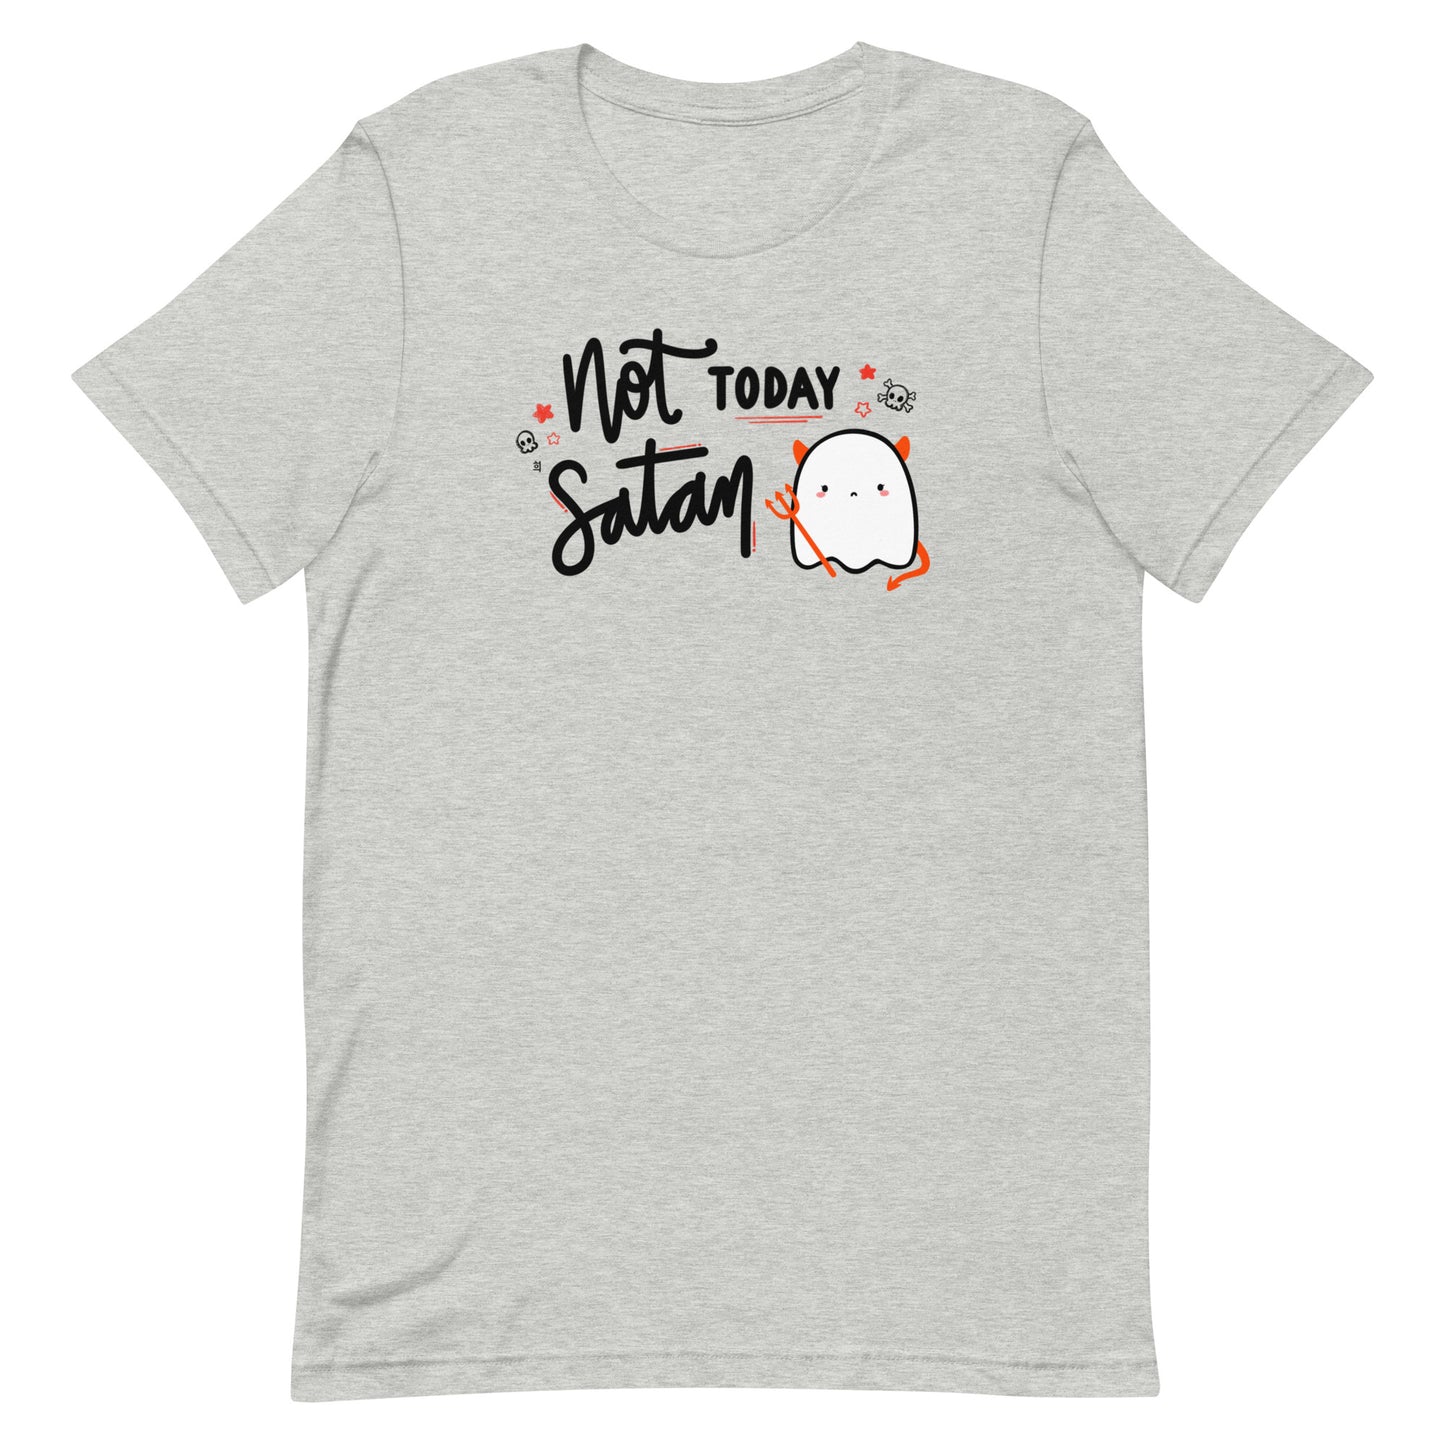 Not Today Satan Unisex T-Shirt